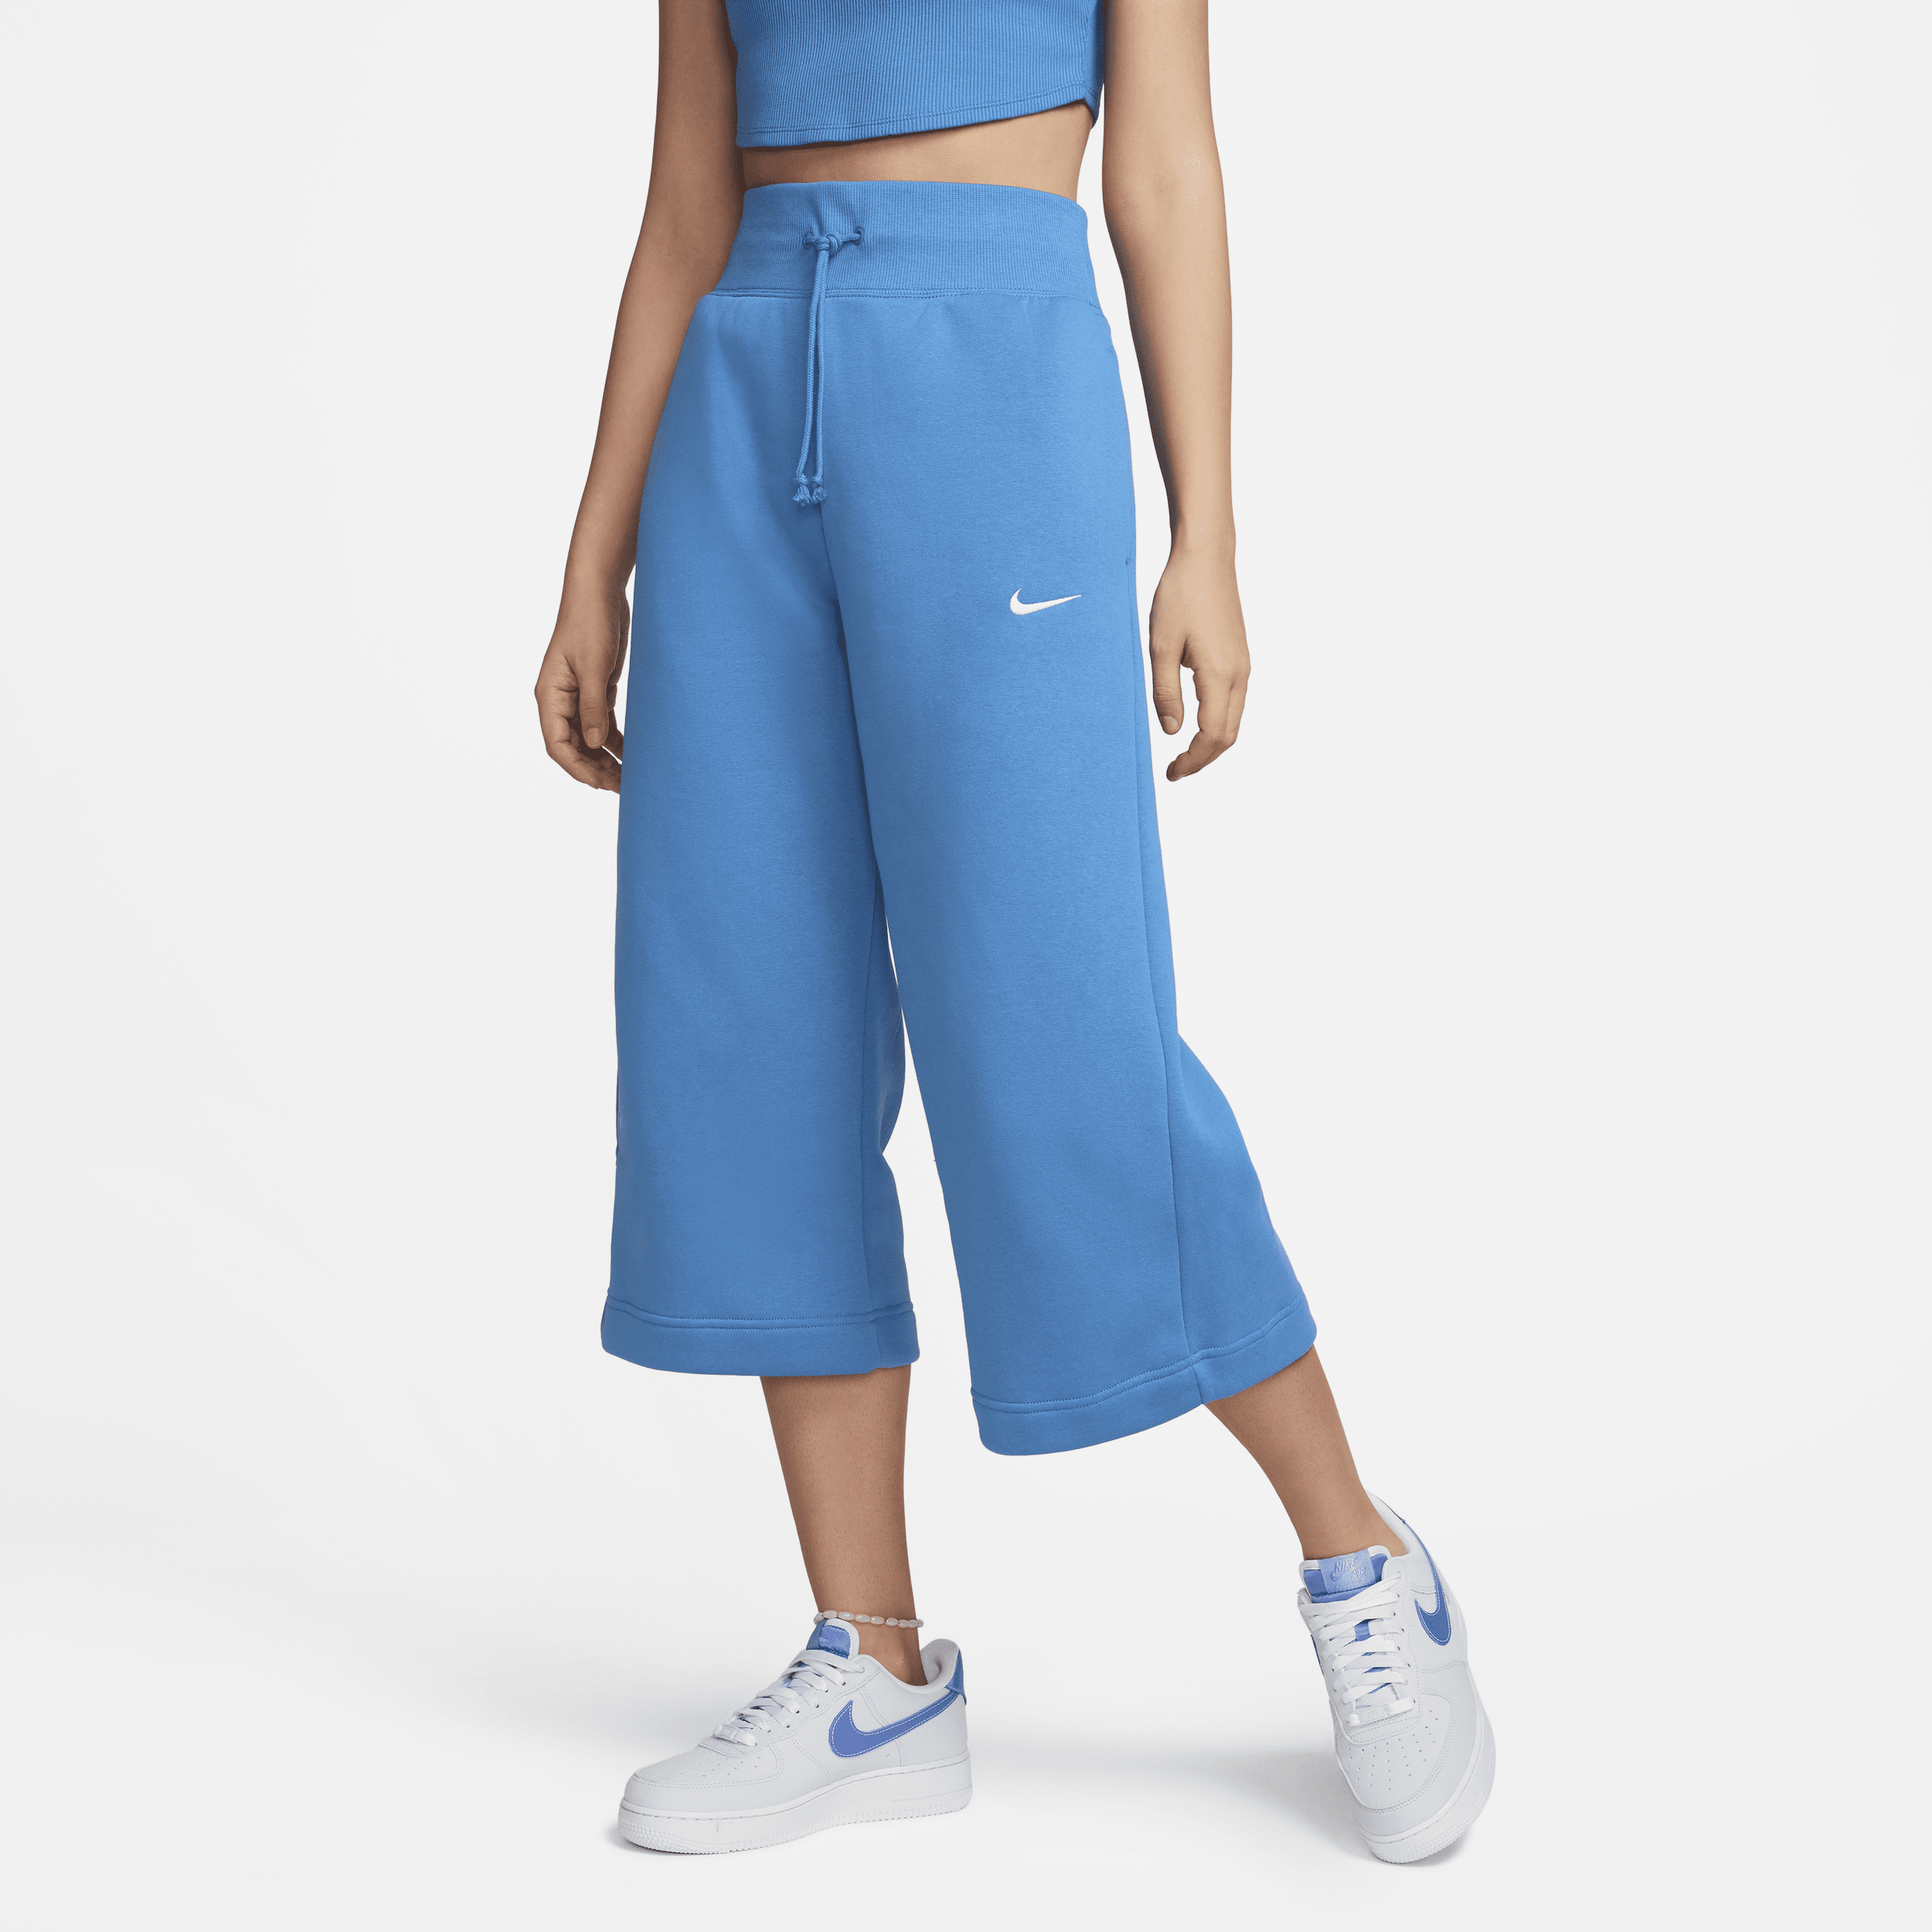 Pantaloni tuta a vita alta e lunghezza ridotta Nike Sportswear Phoenix Fleece – Donna - Blu